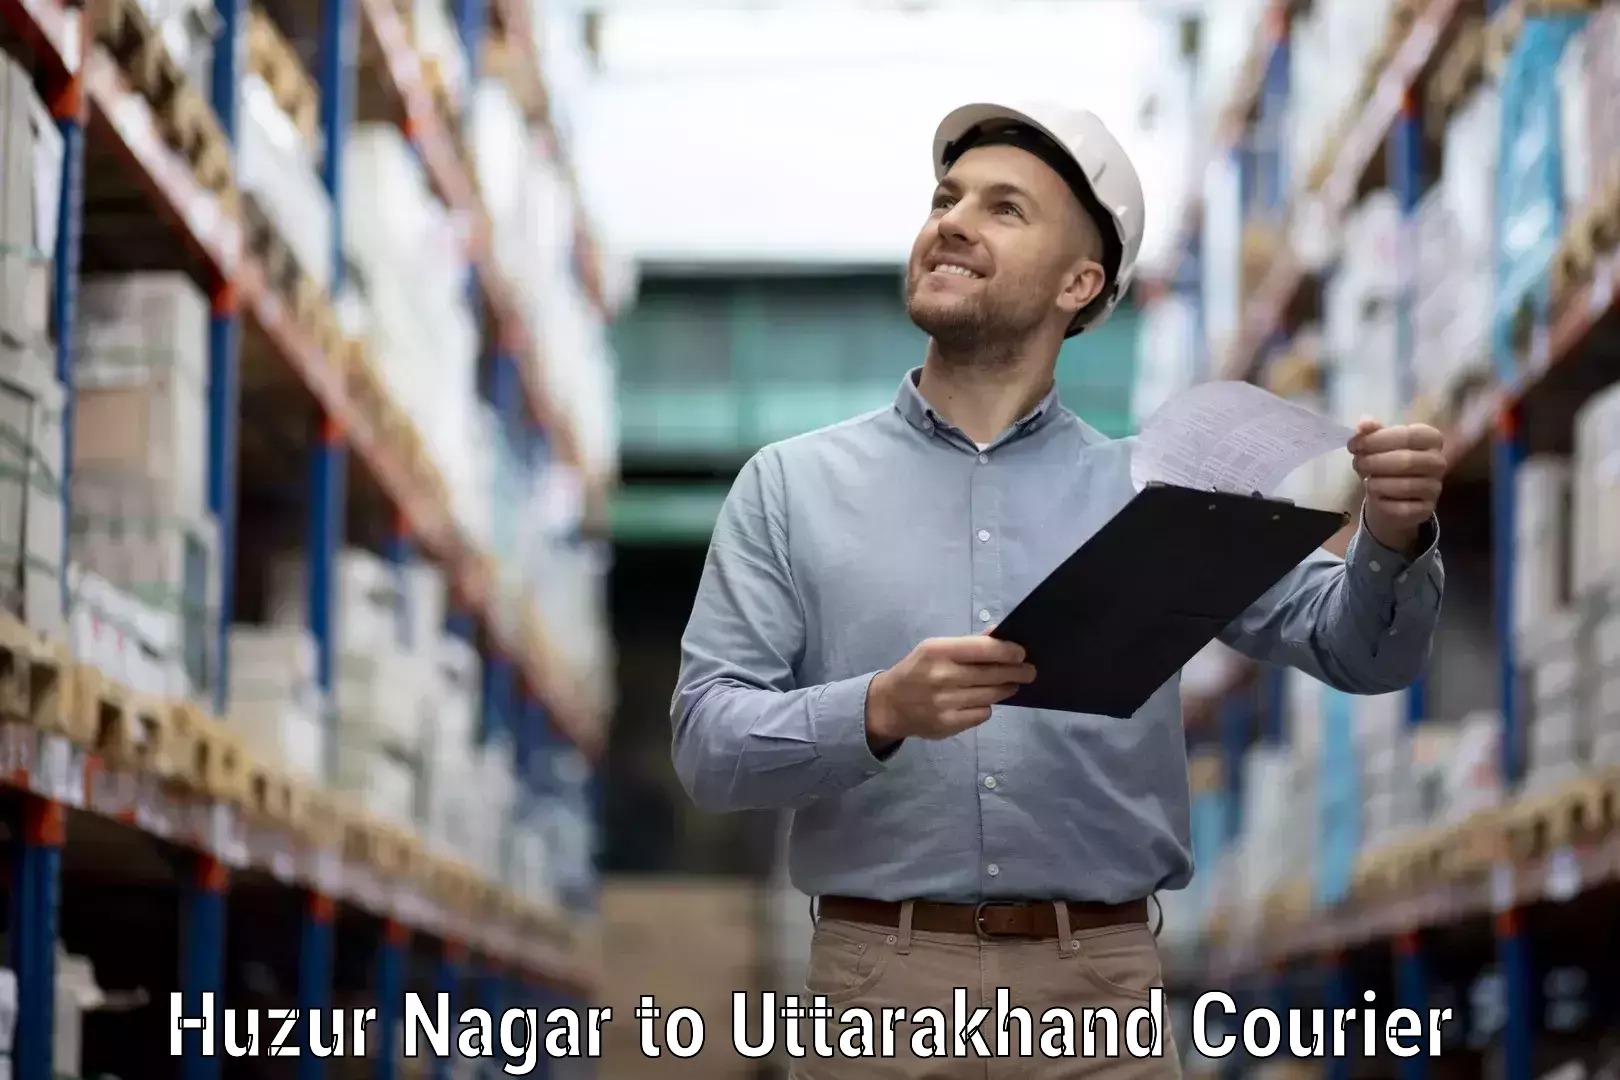 Courier service comparison Huzur Nagar to Doiwala